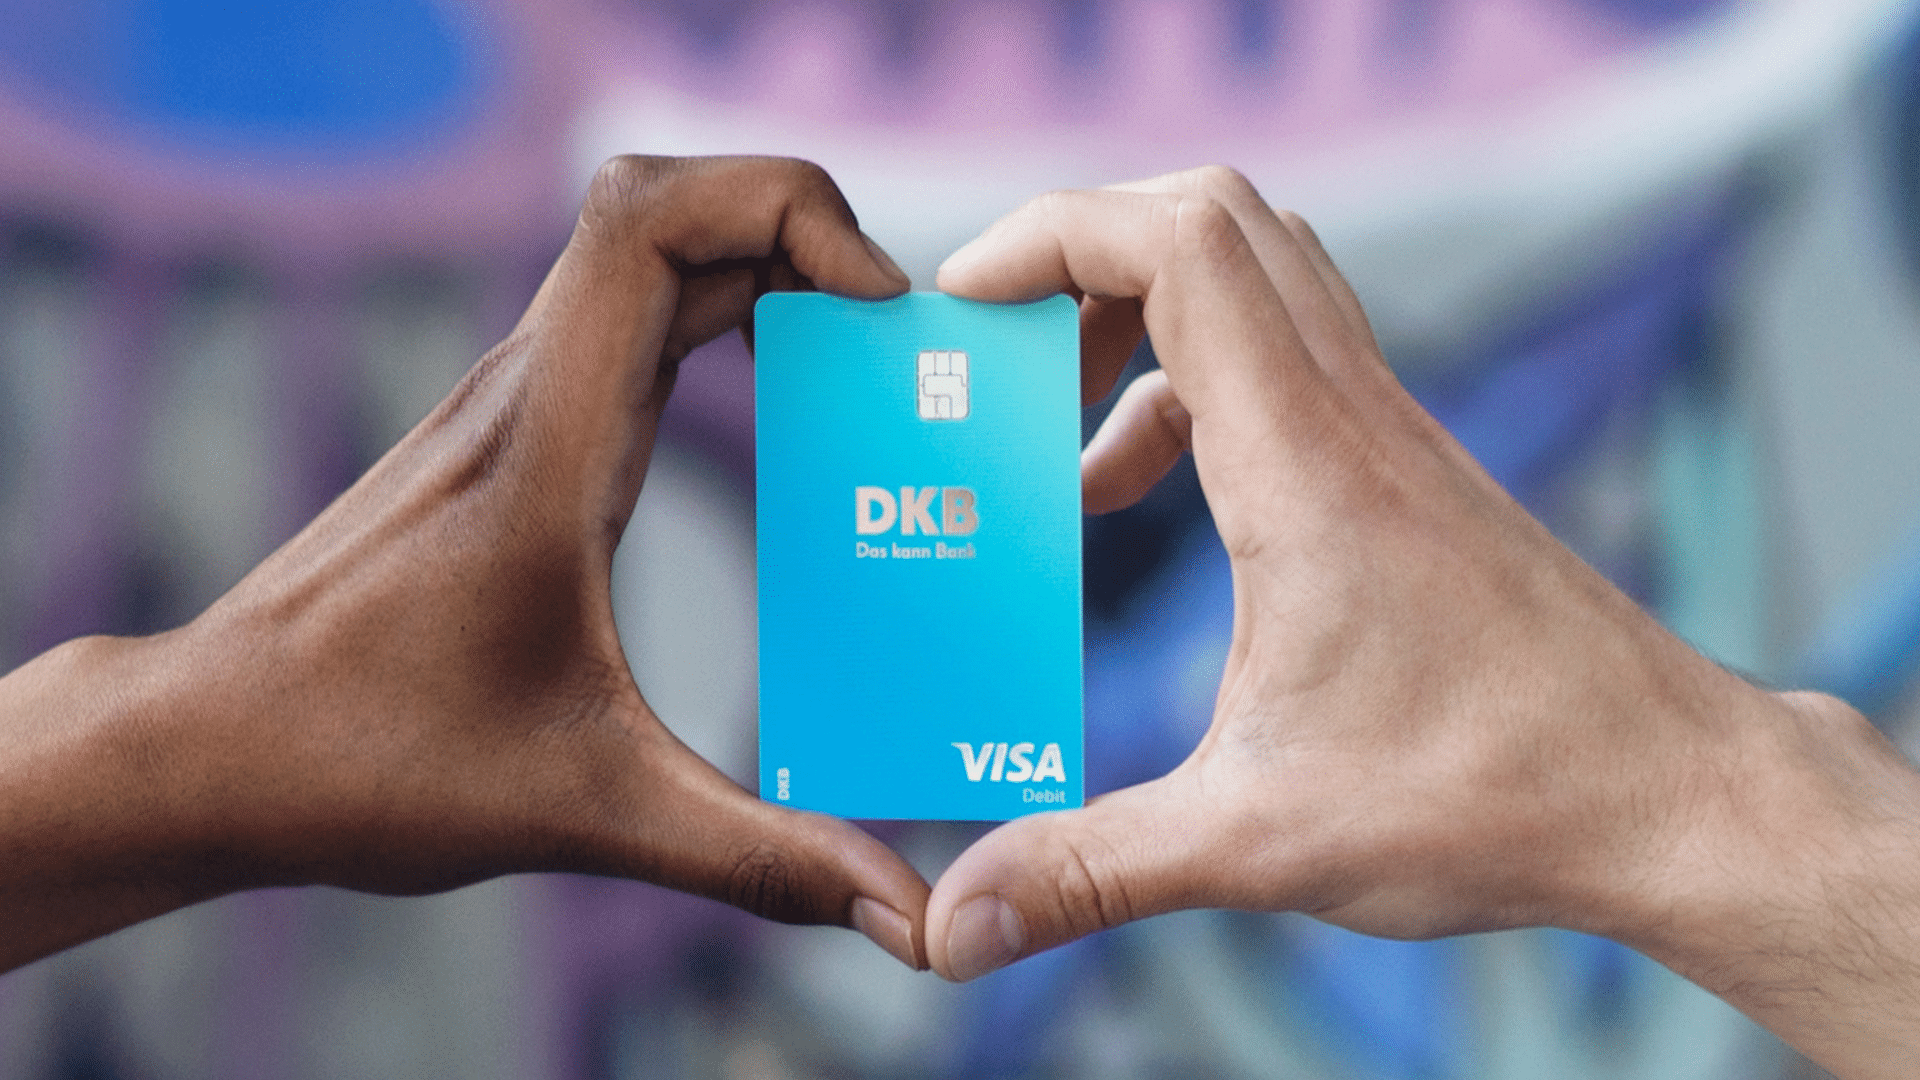 DKB Visa Hand